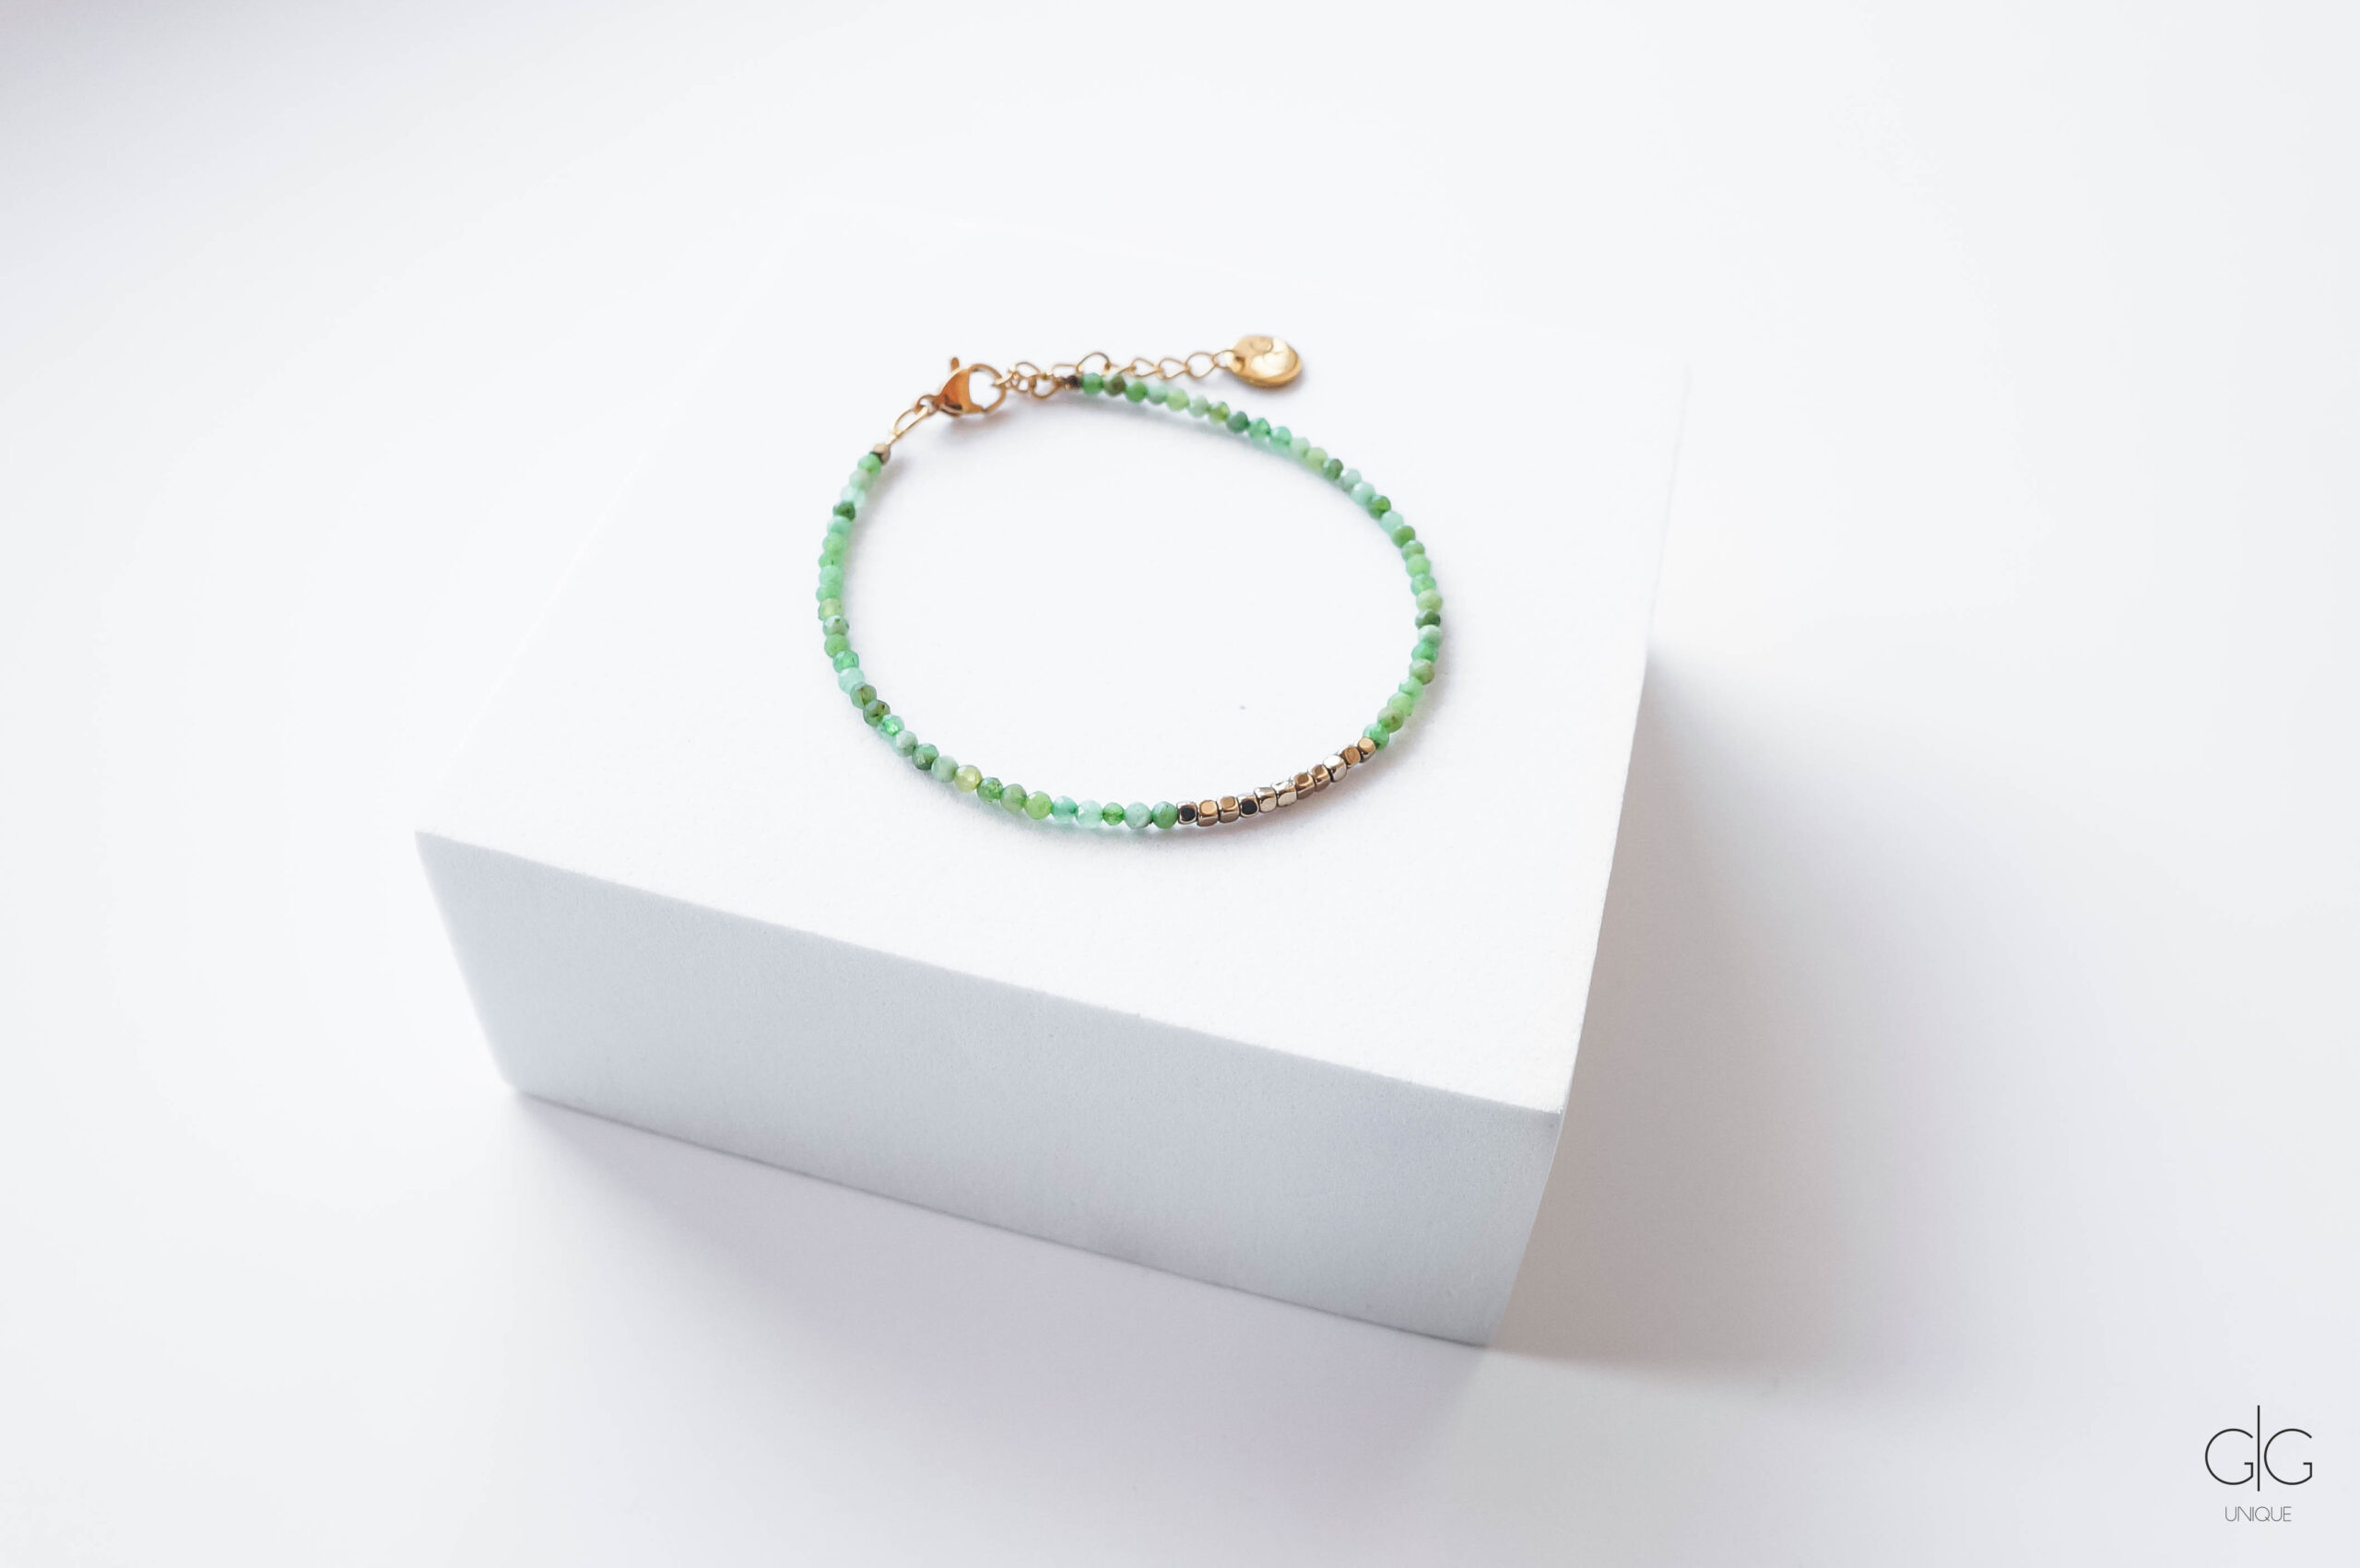 Green nephrite stone bracelet - GG Unique